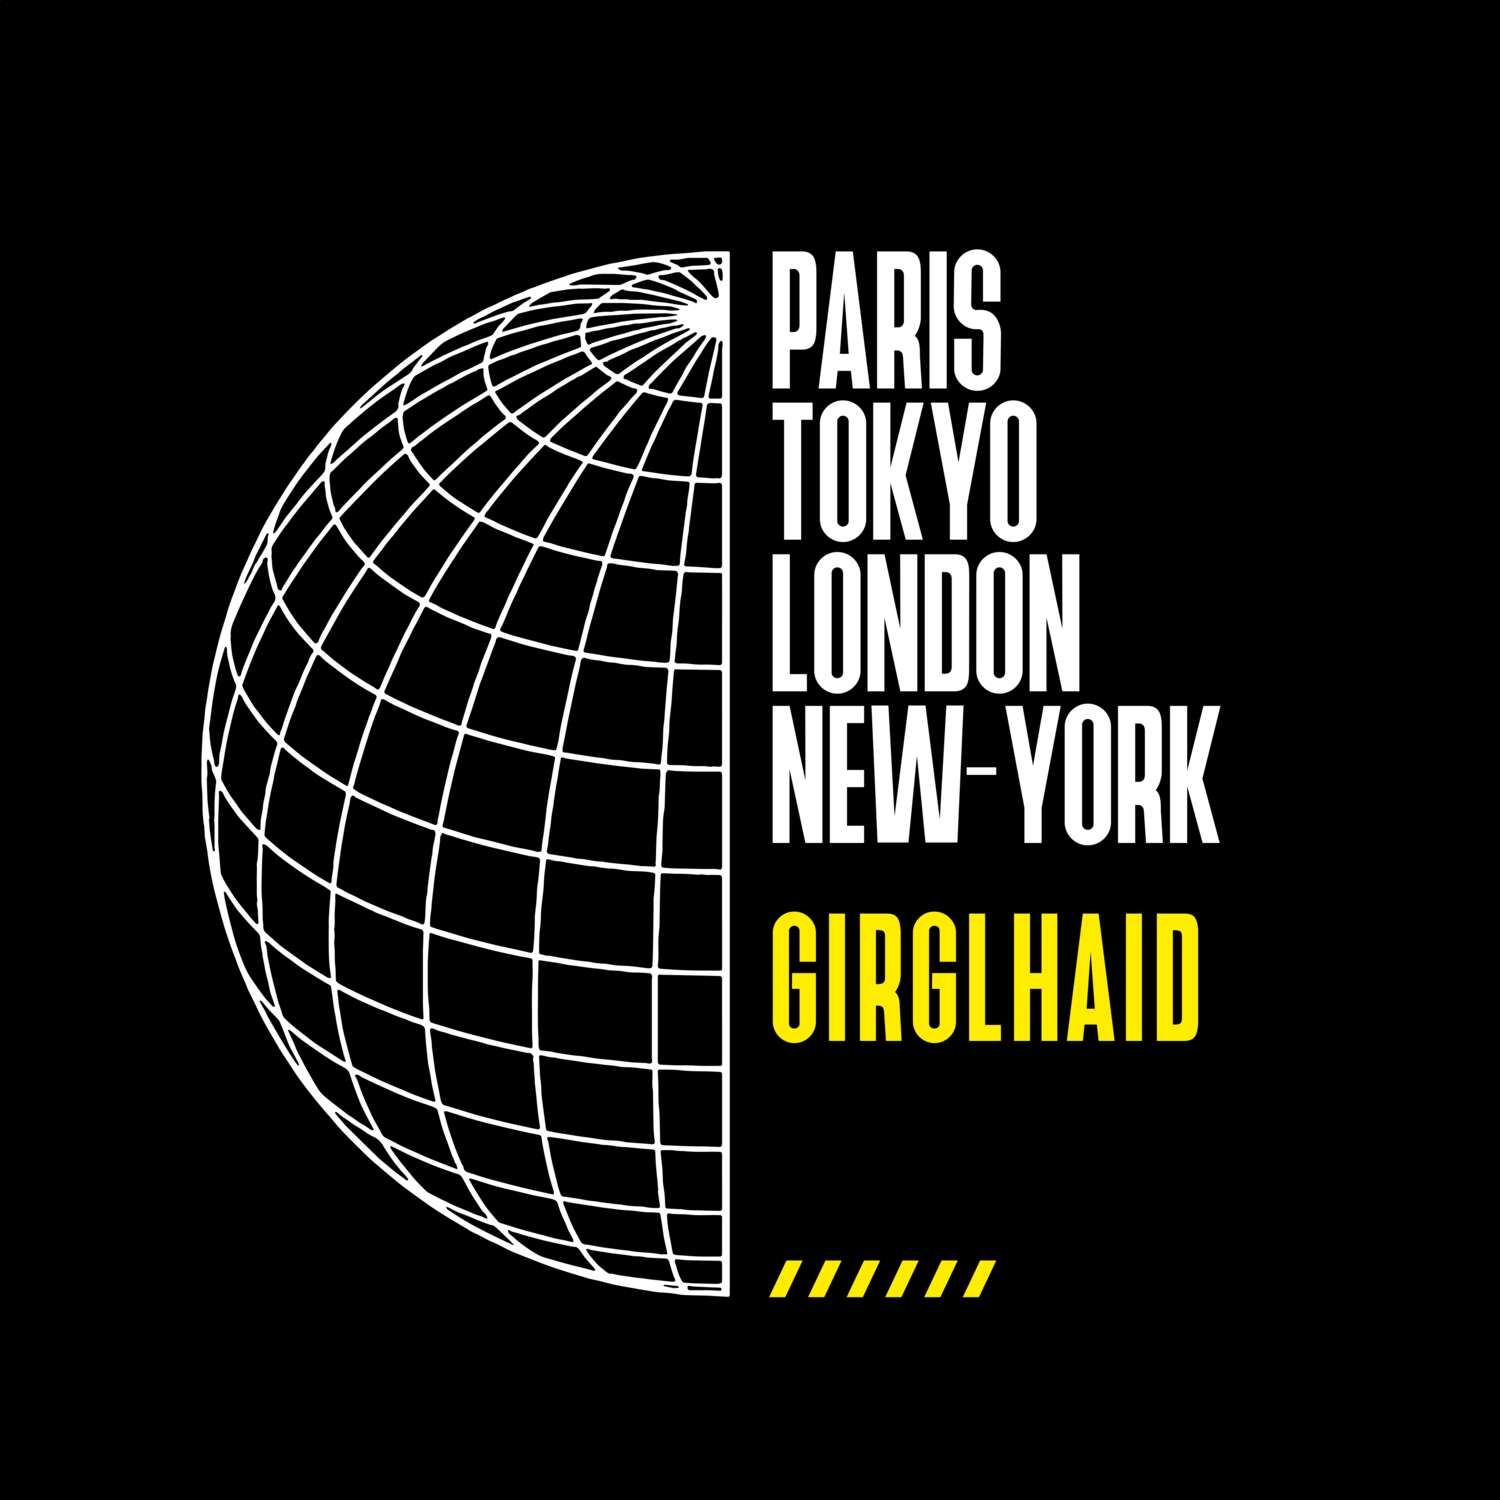 Girglhaid T-Shirt »Paris Tokyo London«